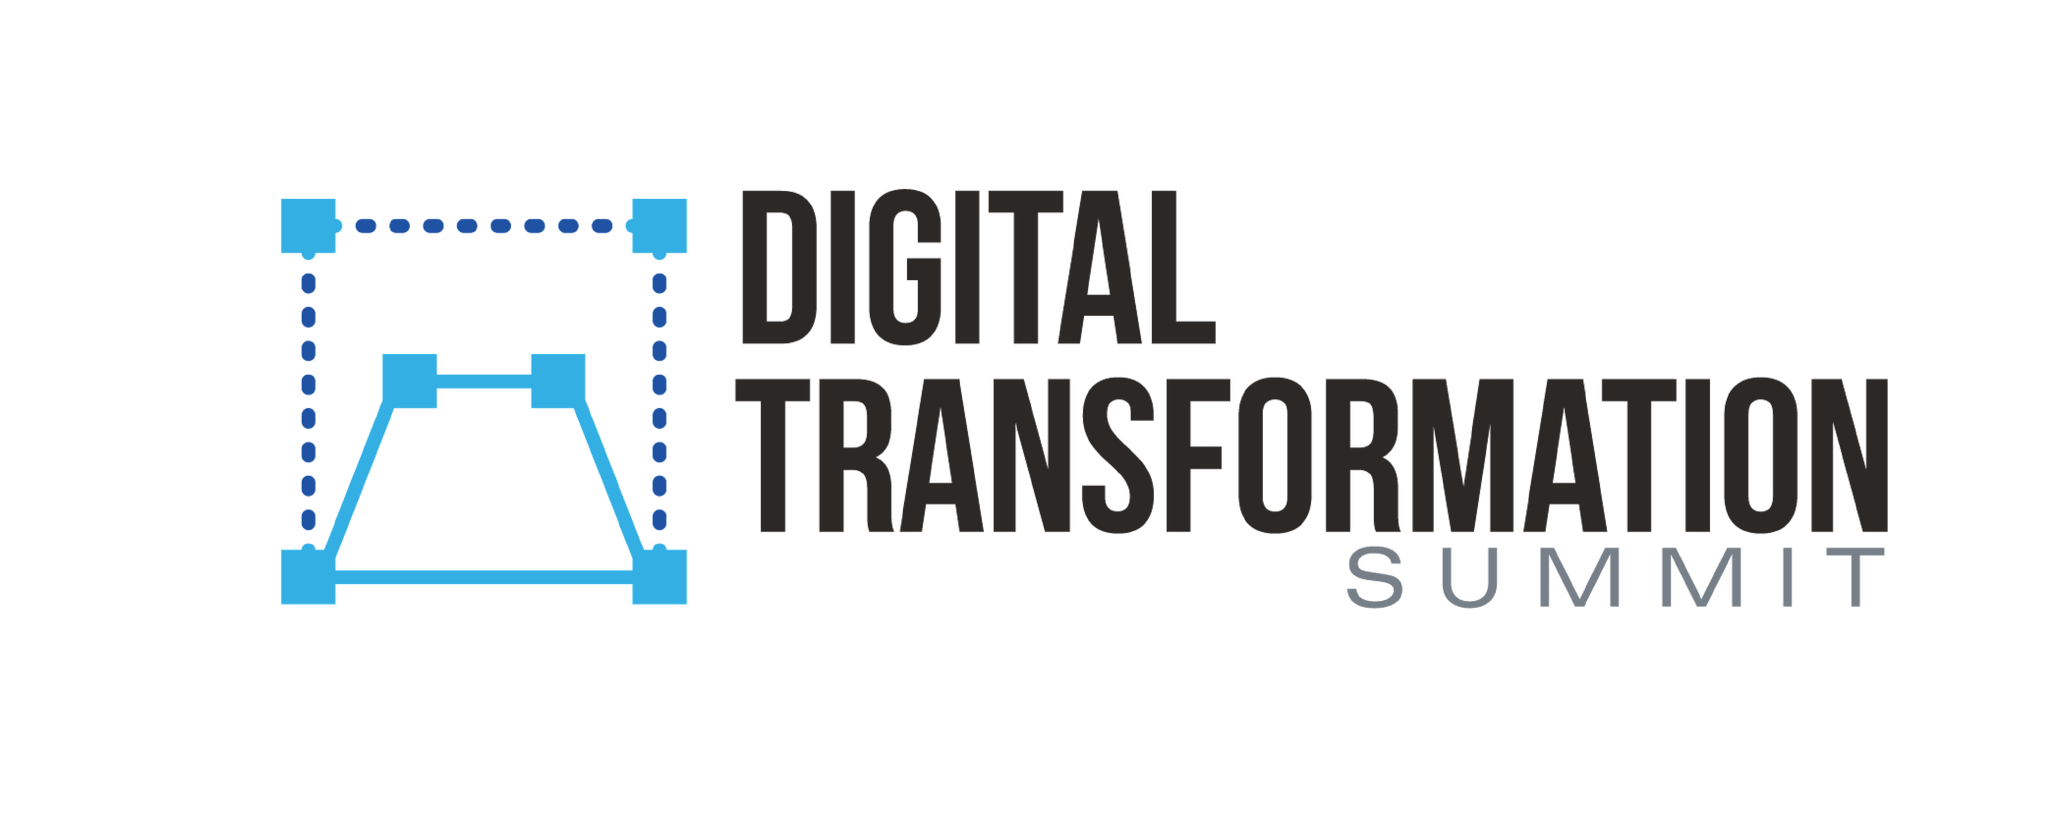 Digital Transformation Summit Sydney Build All Stages